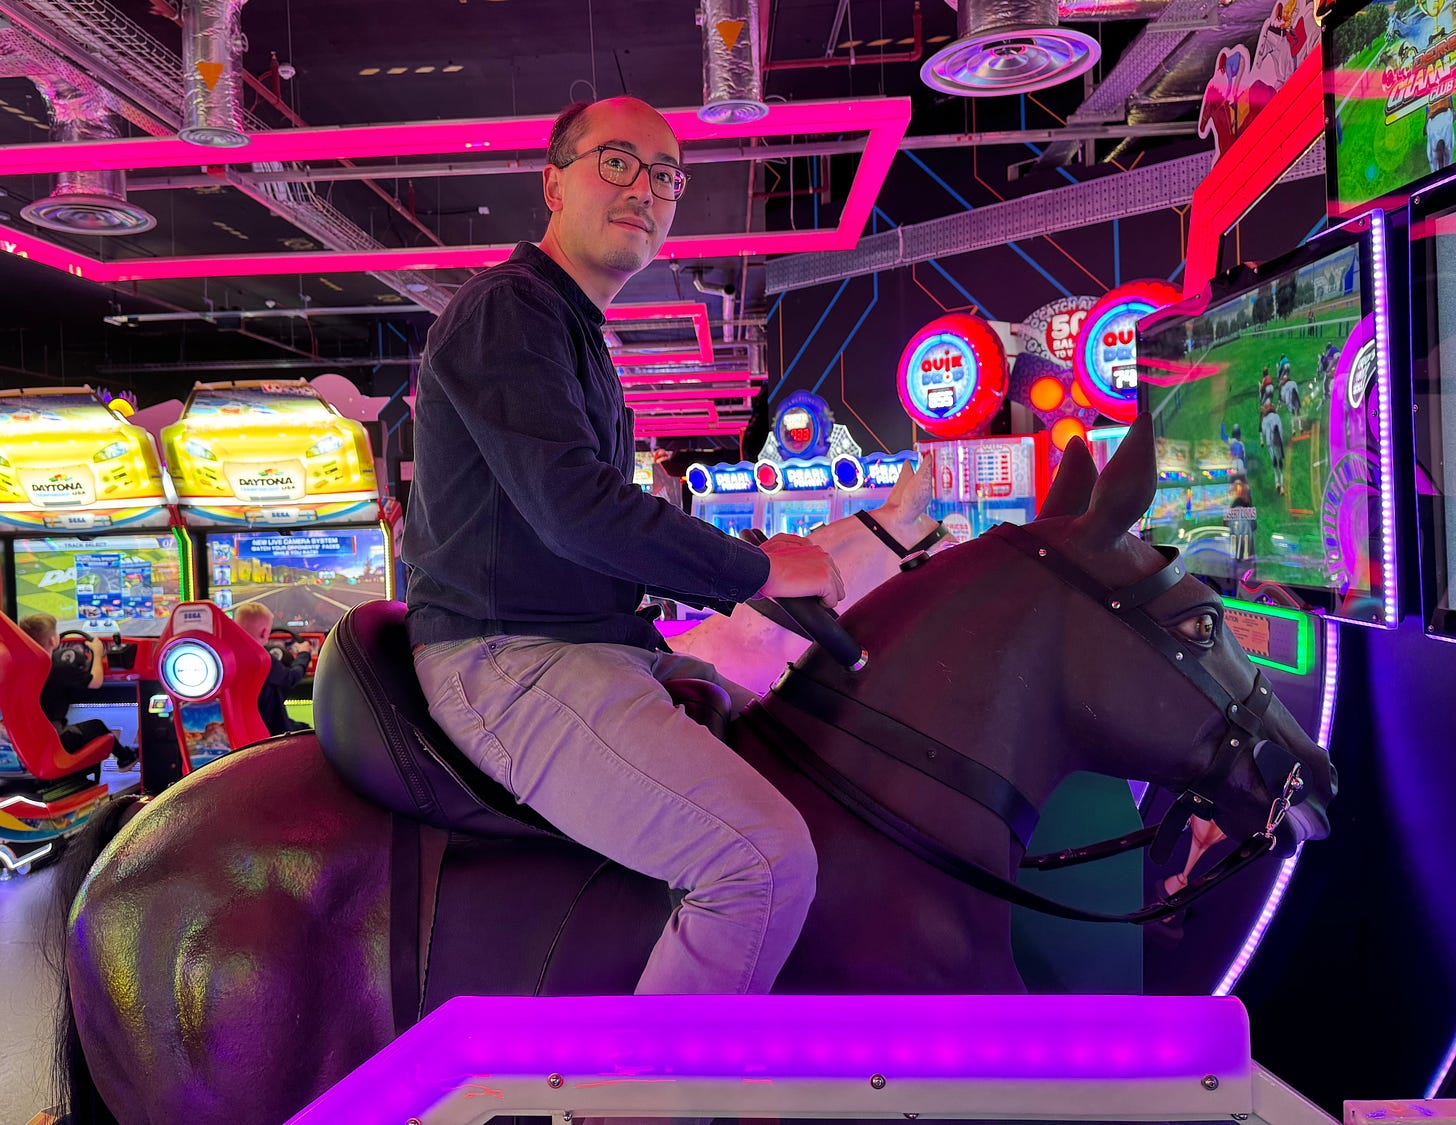 Adrian sitting on an arcade horse